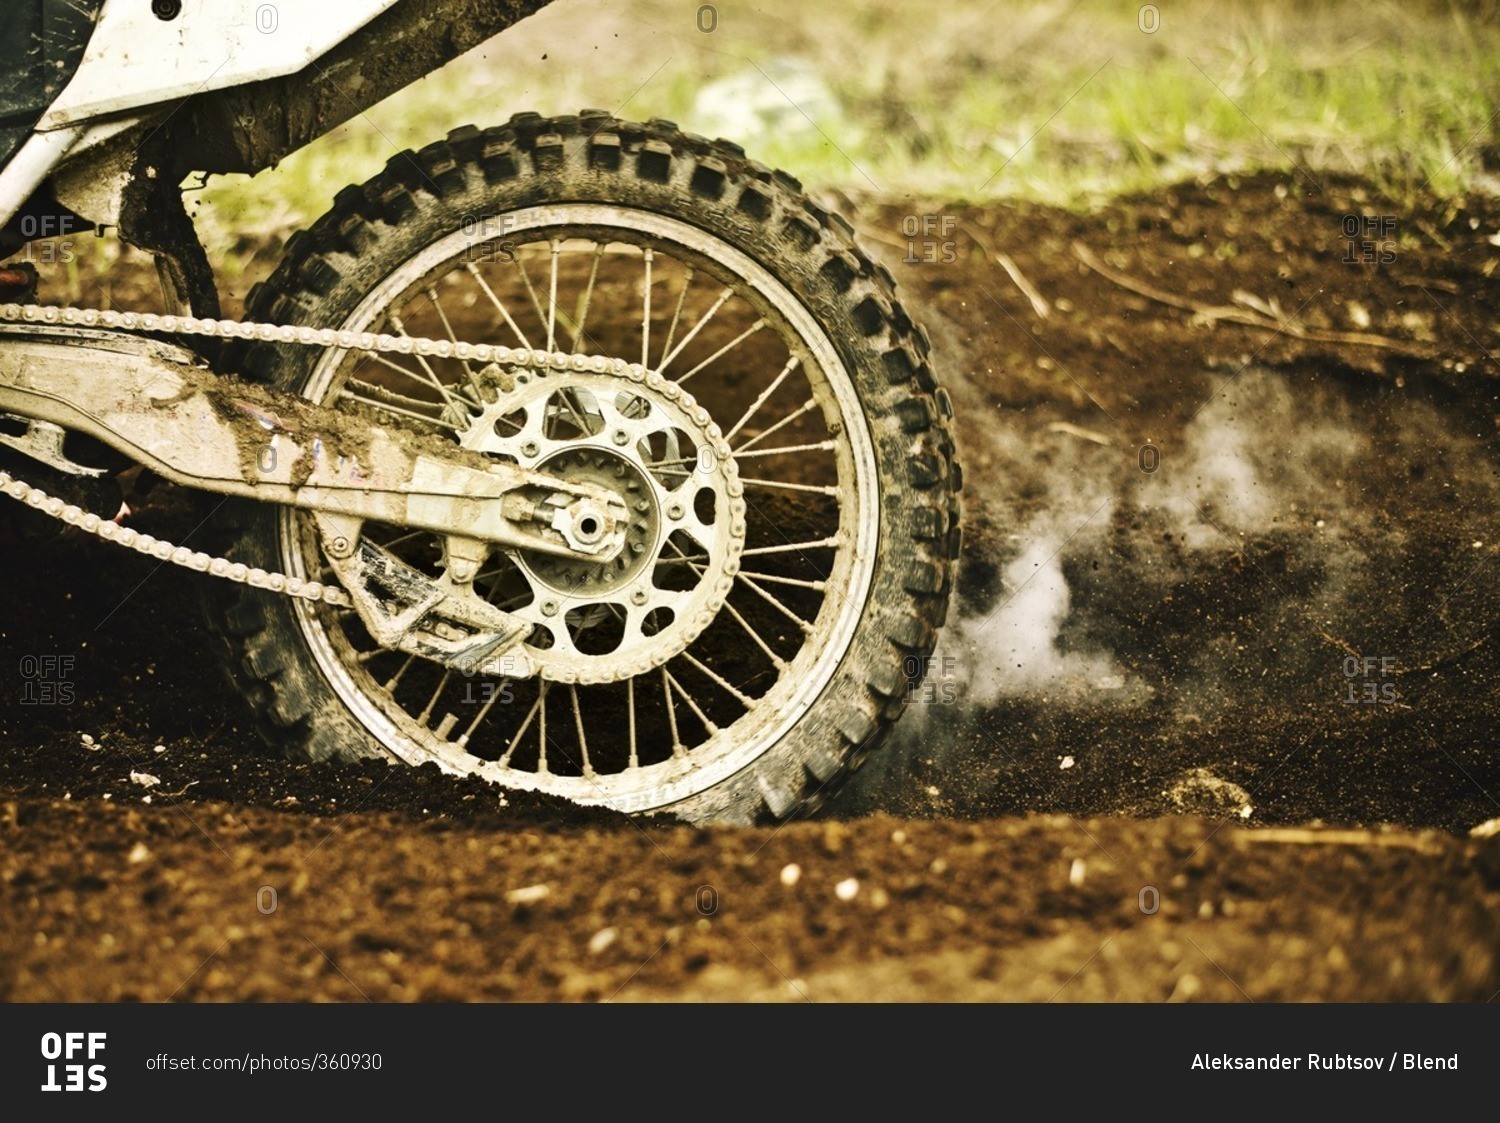 Dirt bike tire smoking in dirt